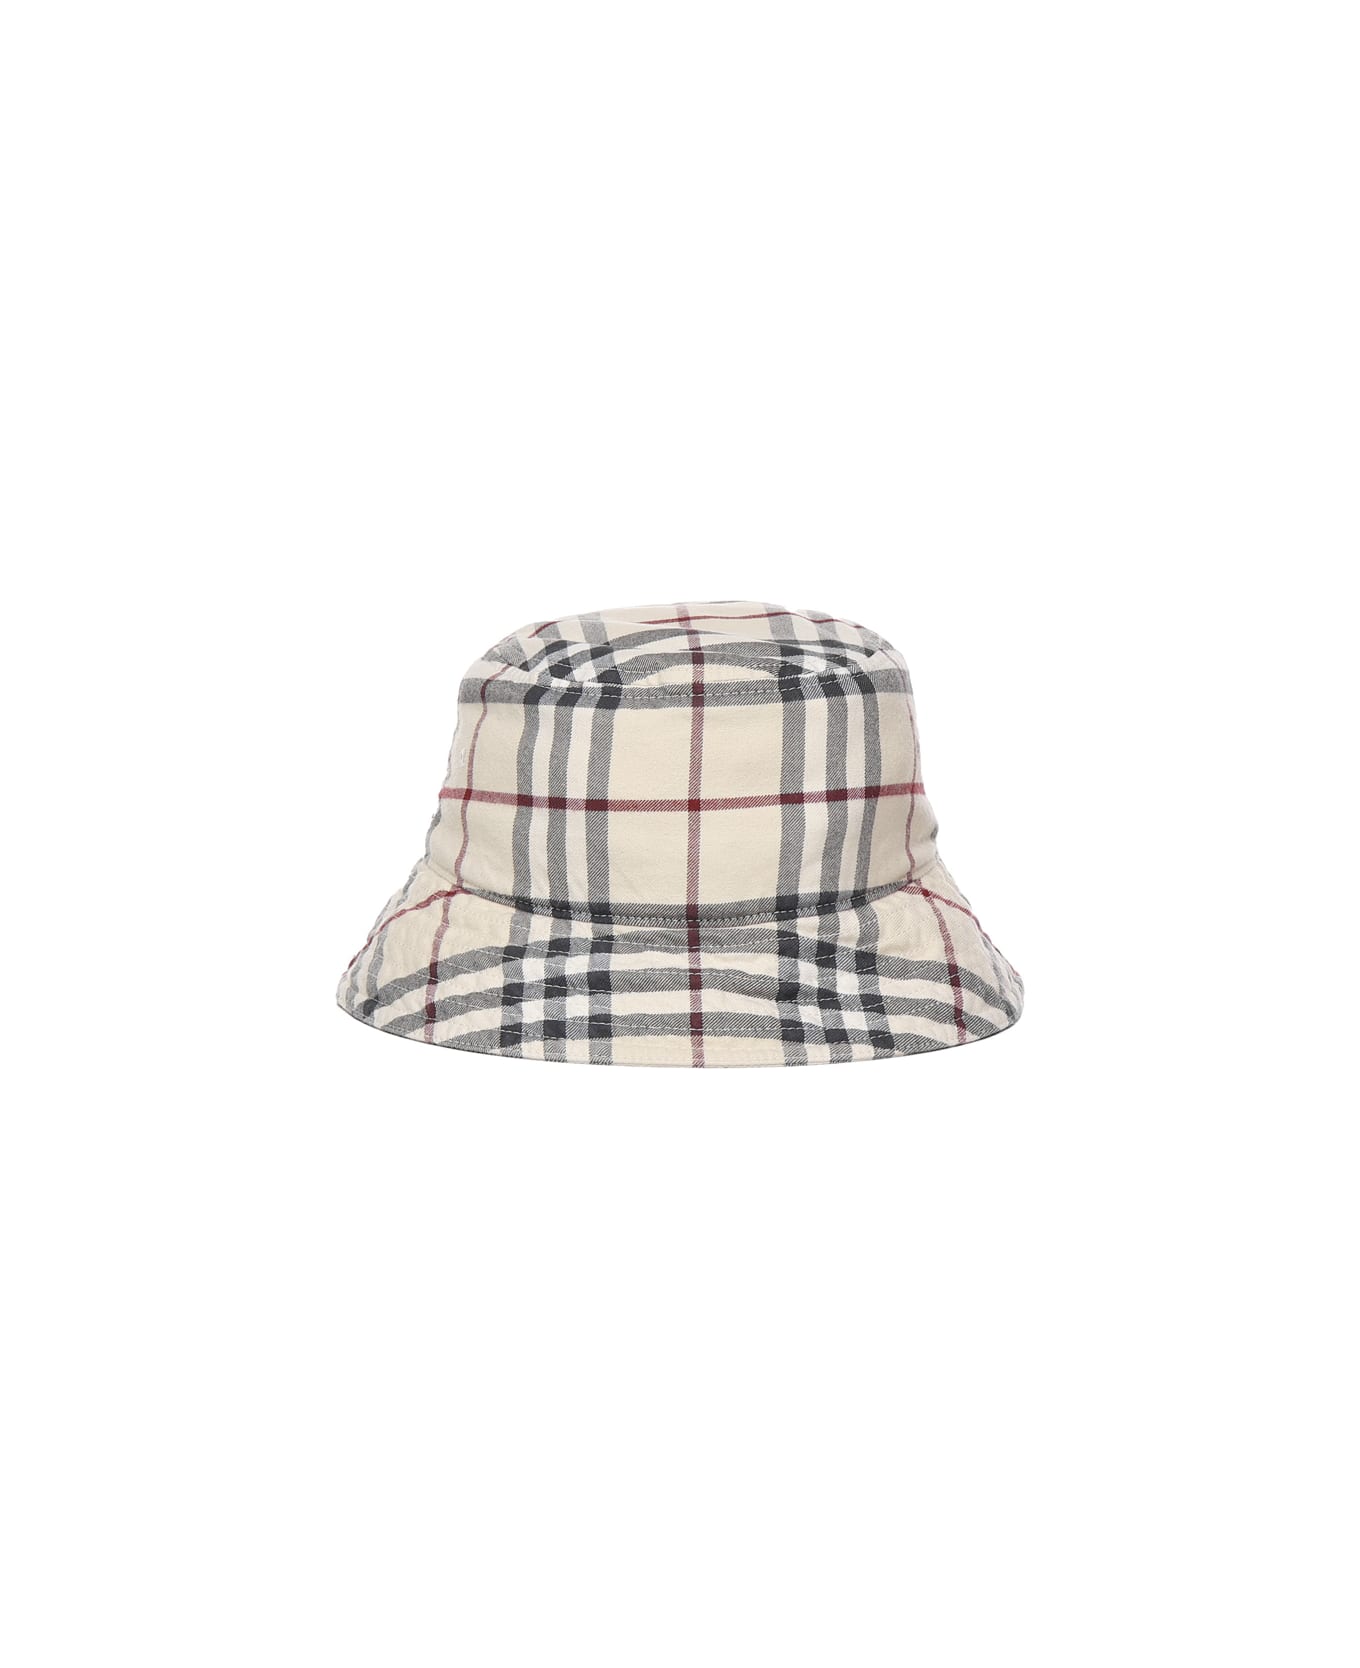 Burberry Vintage Check Bucket Hat - Vintage check 帽子